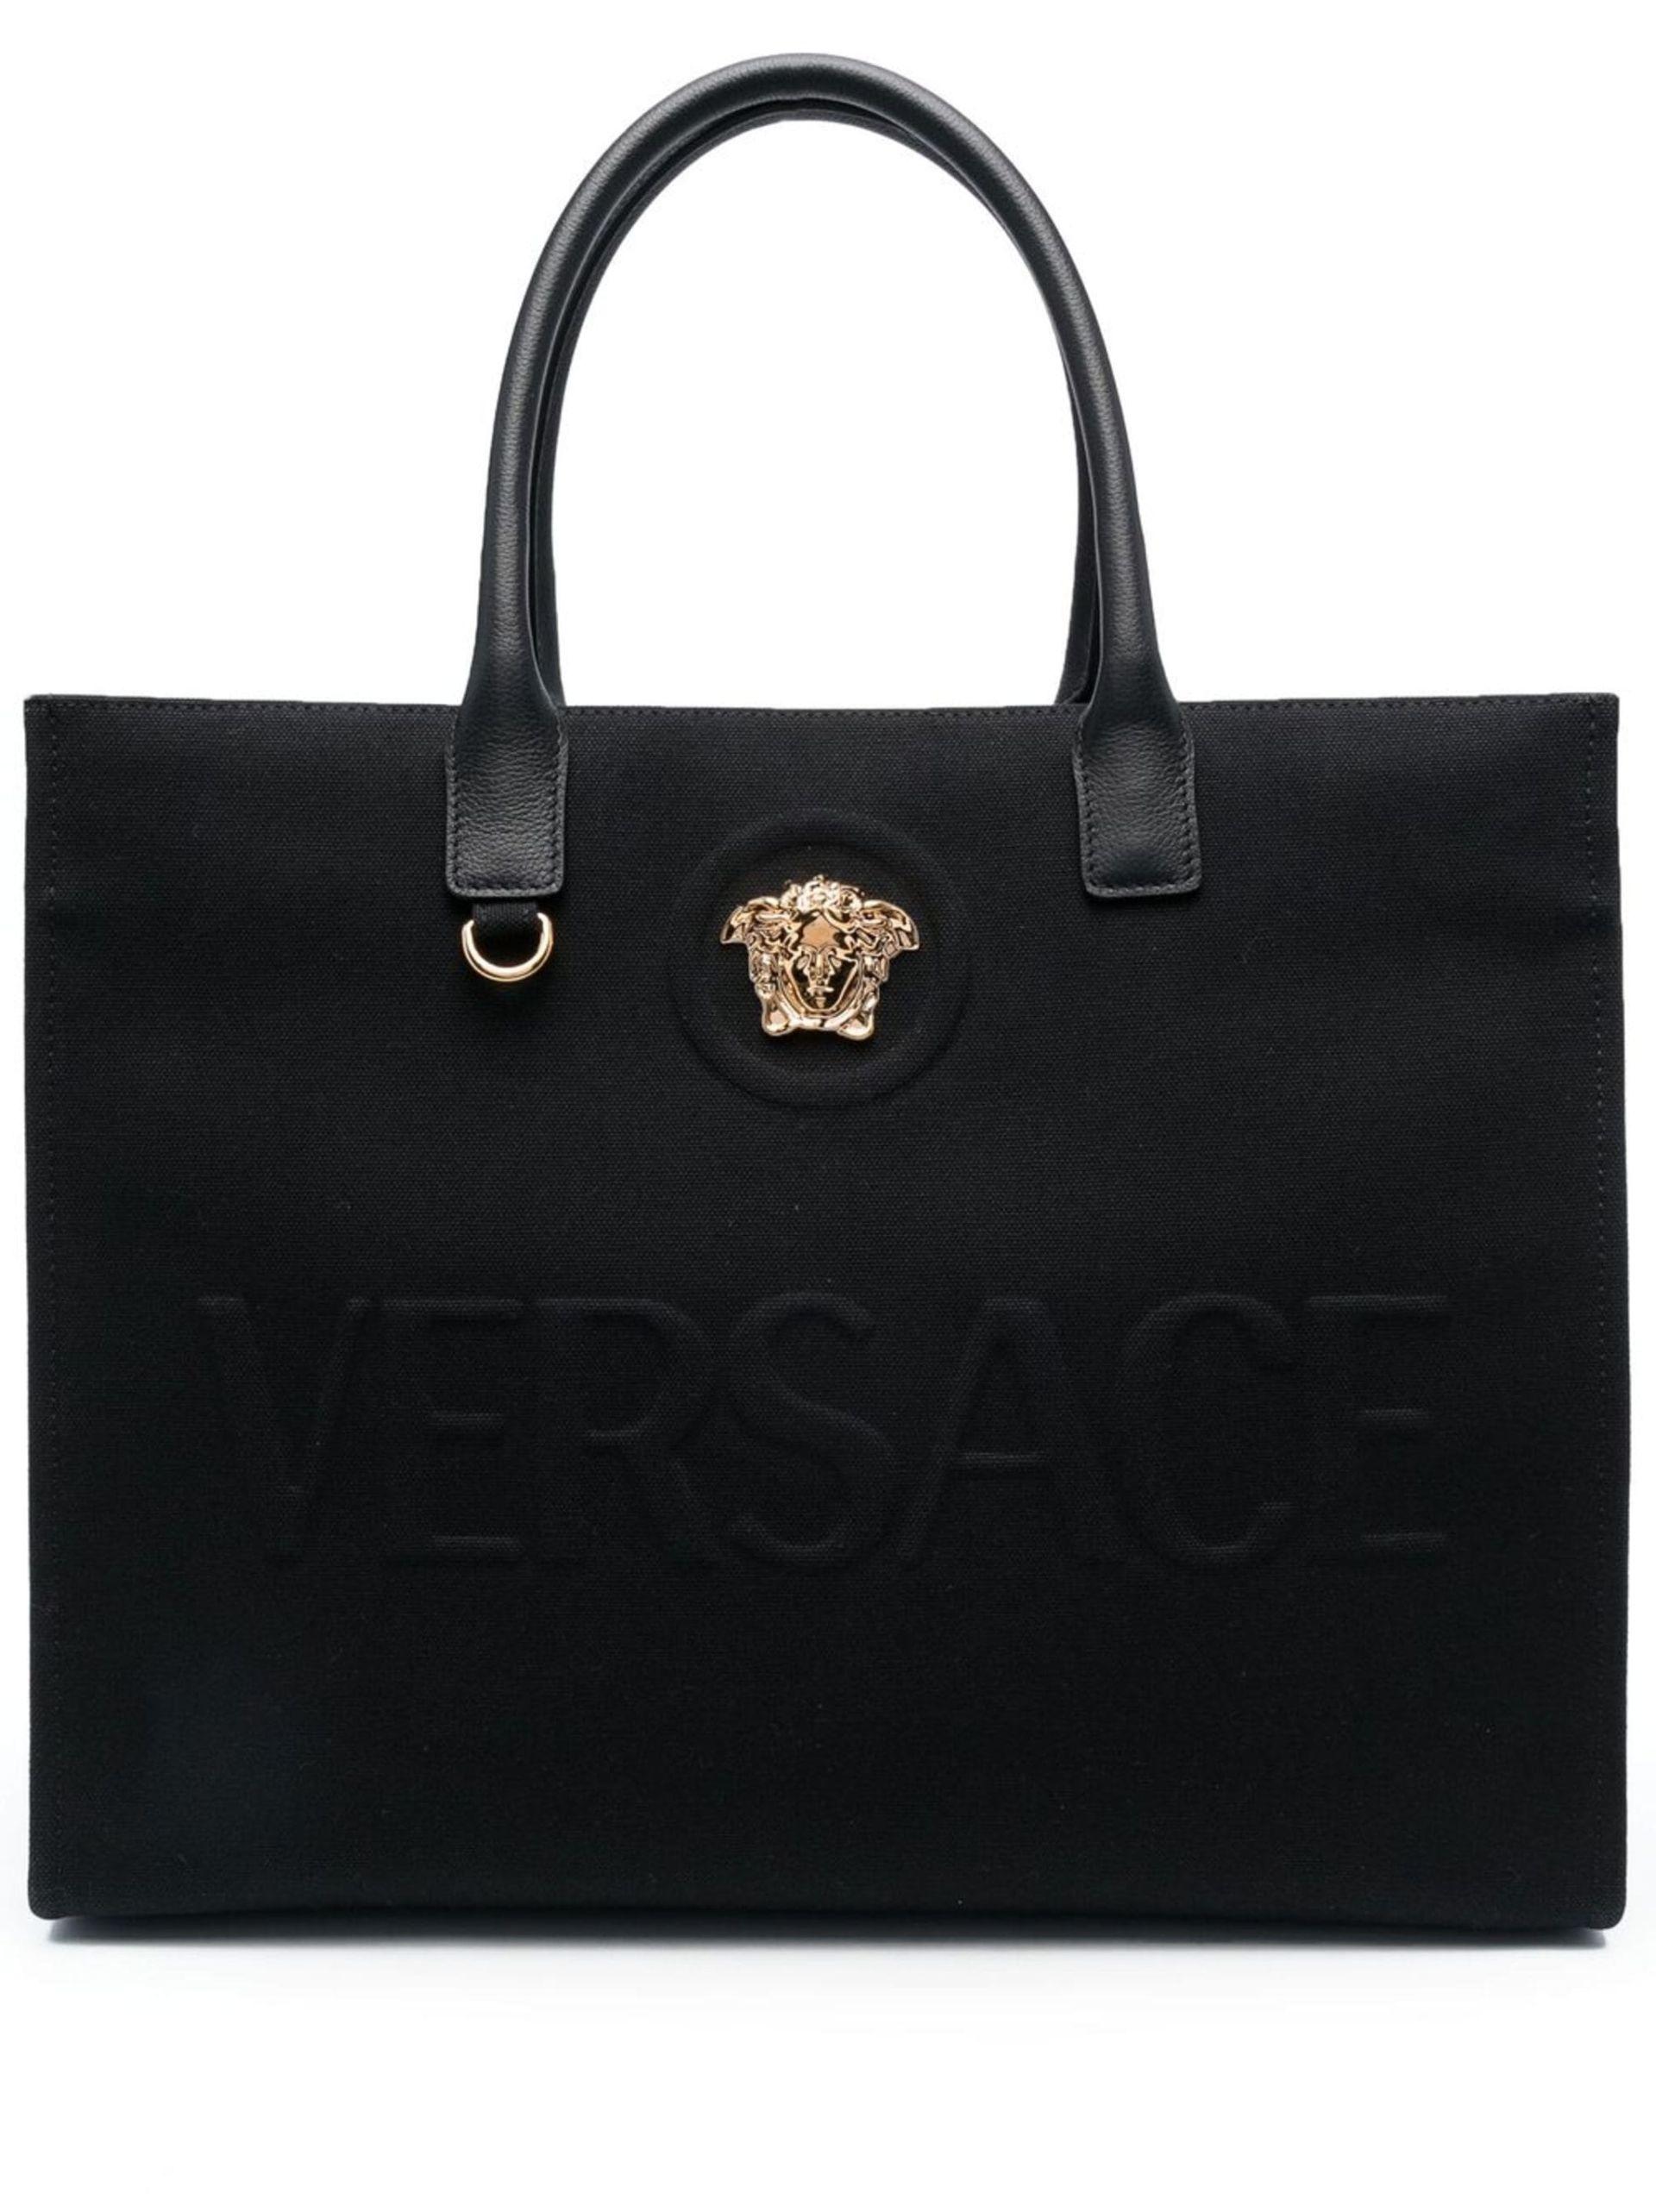 Versace La Medusa Canvas & Leather Tote in Black | Lyst